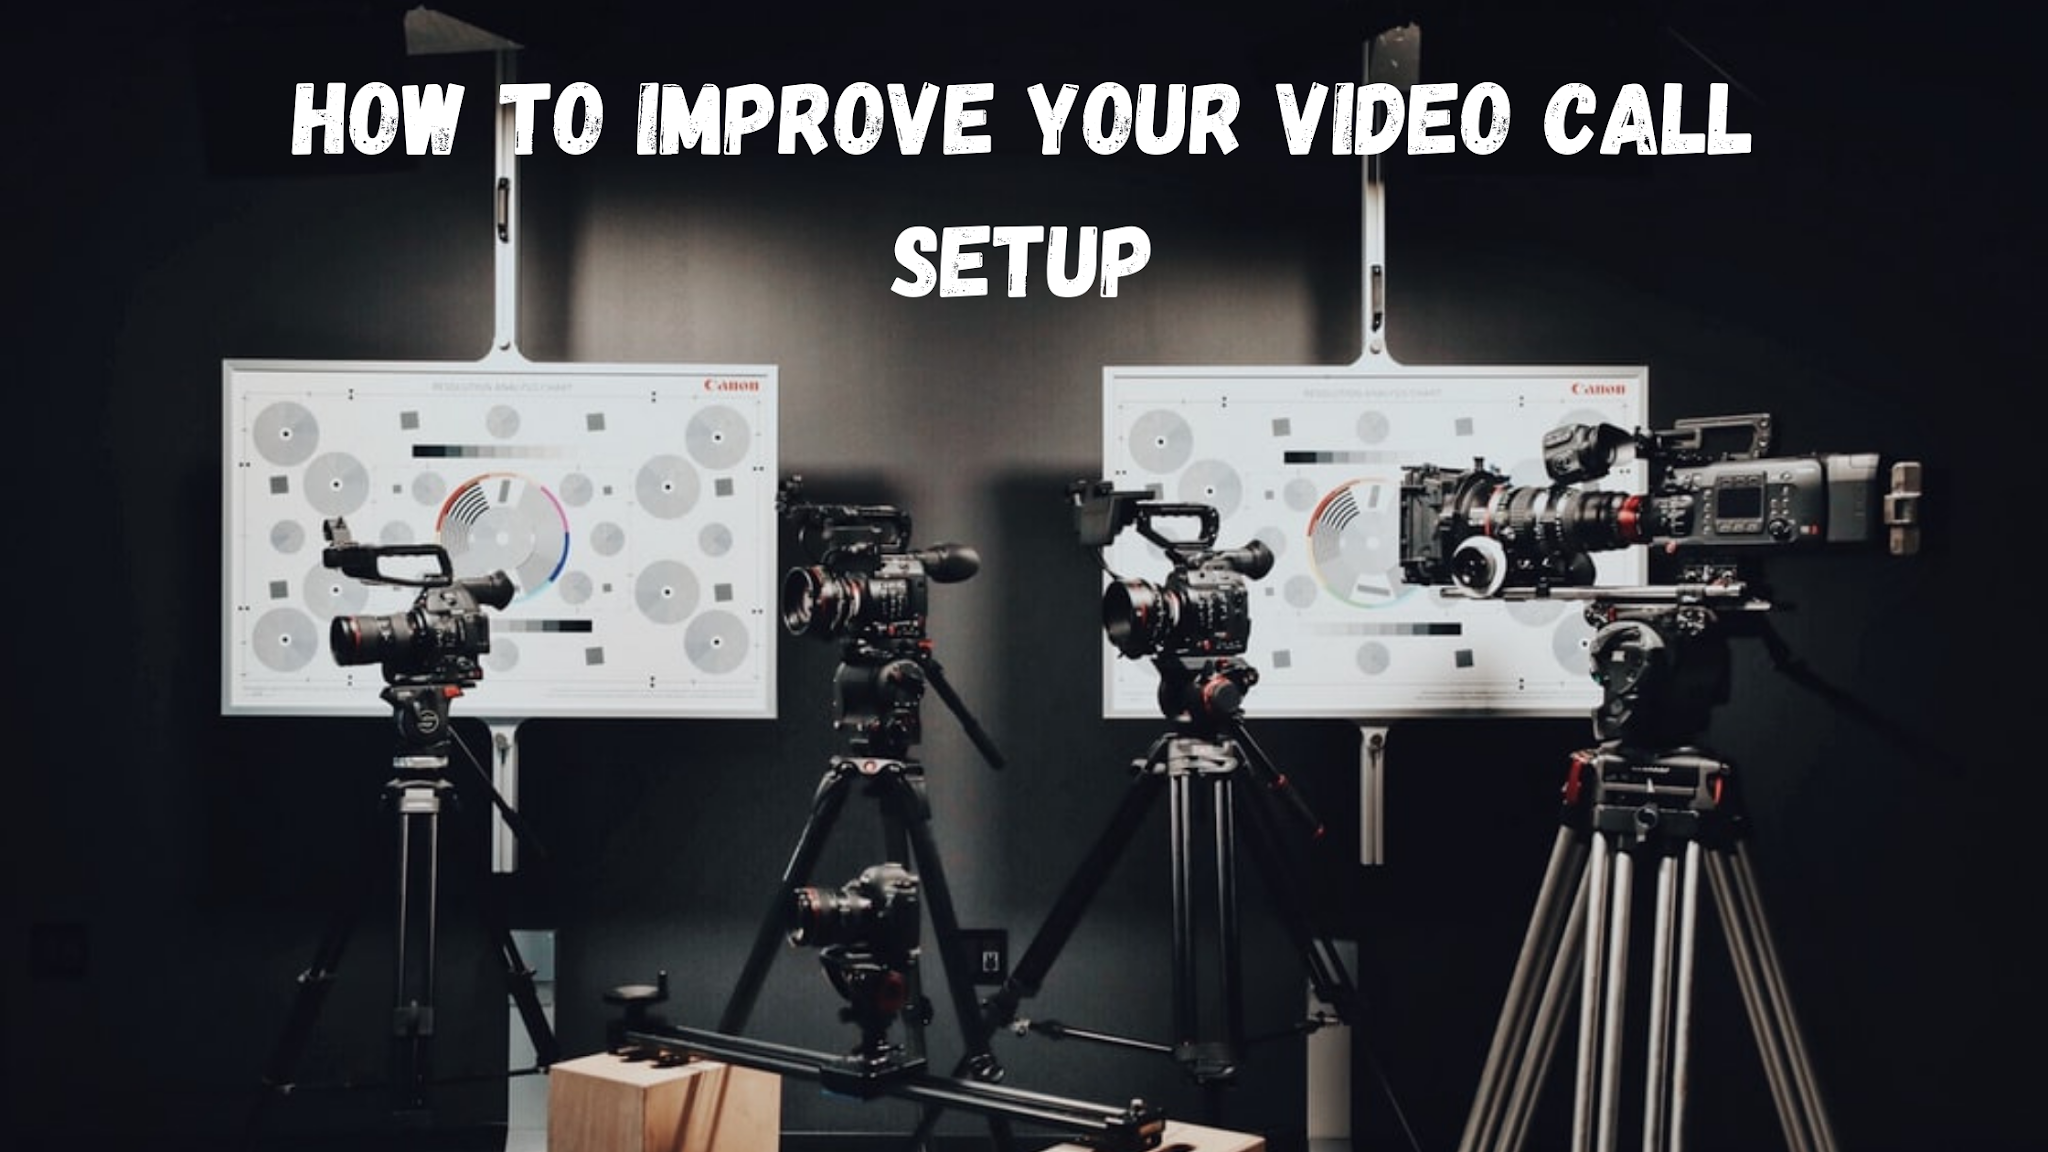 Improve your video call setup